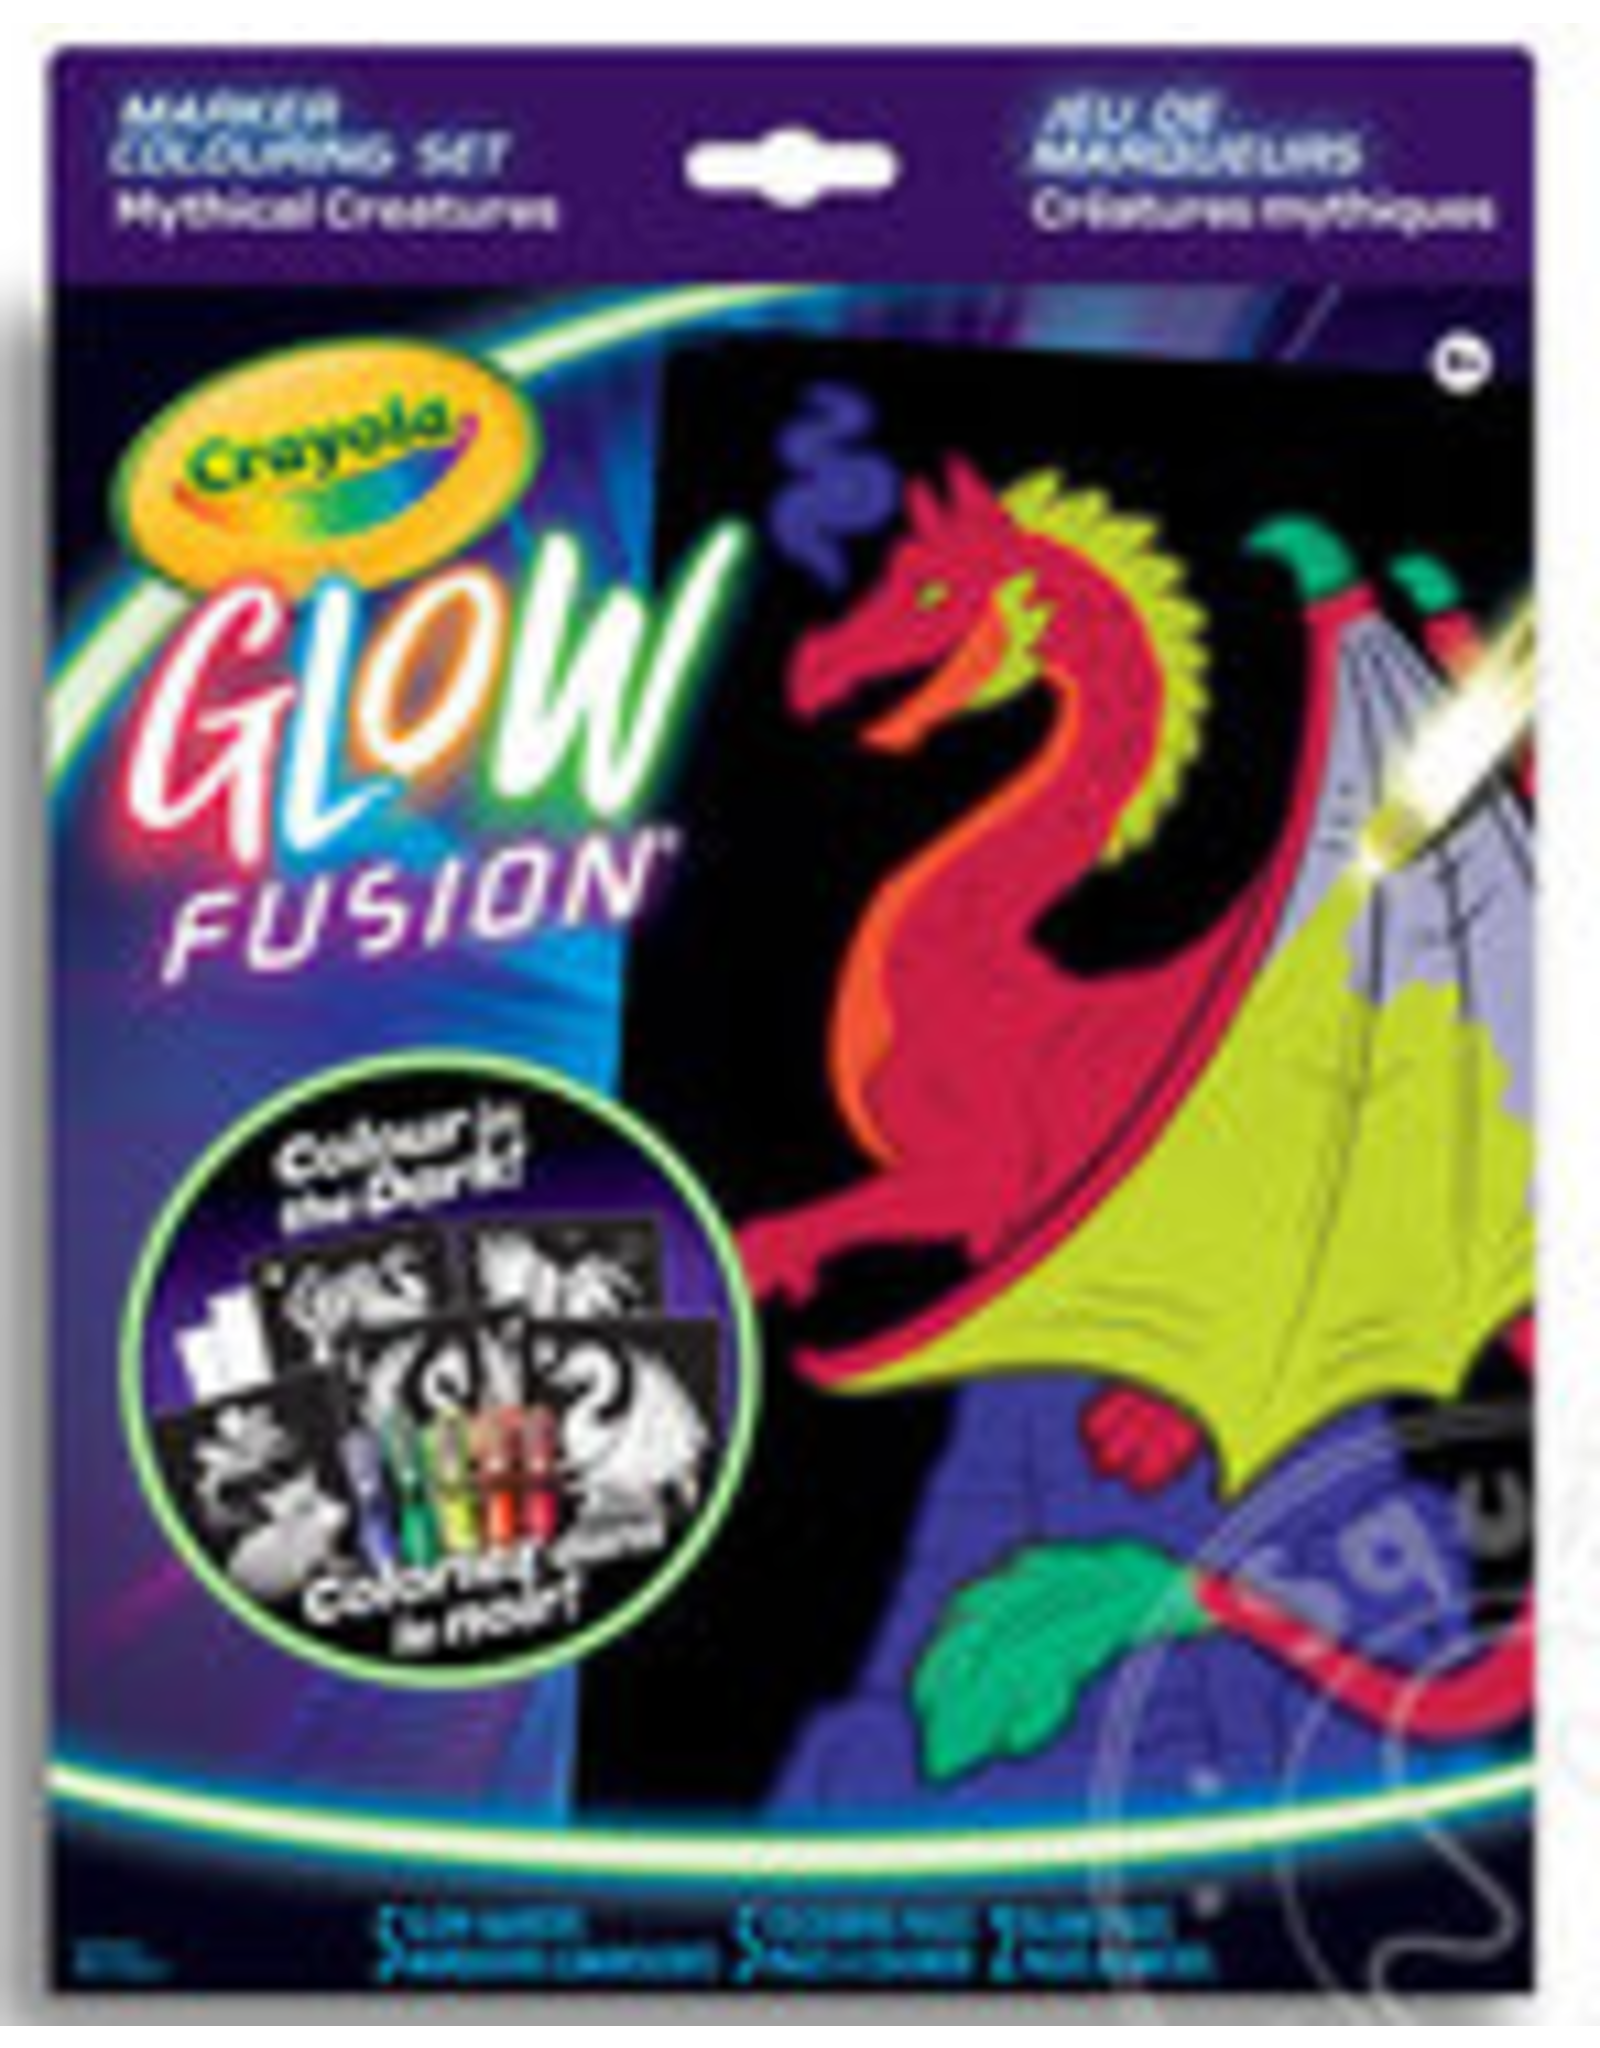 Glow Fusion - mystical creatures